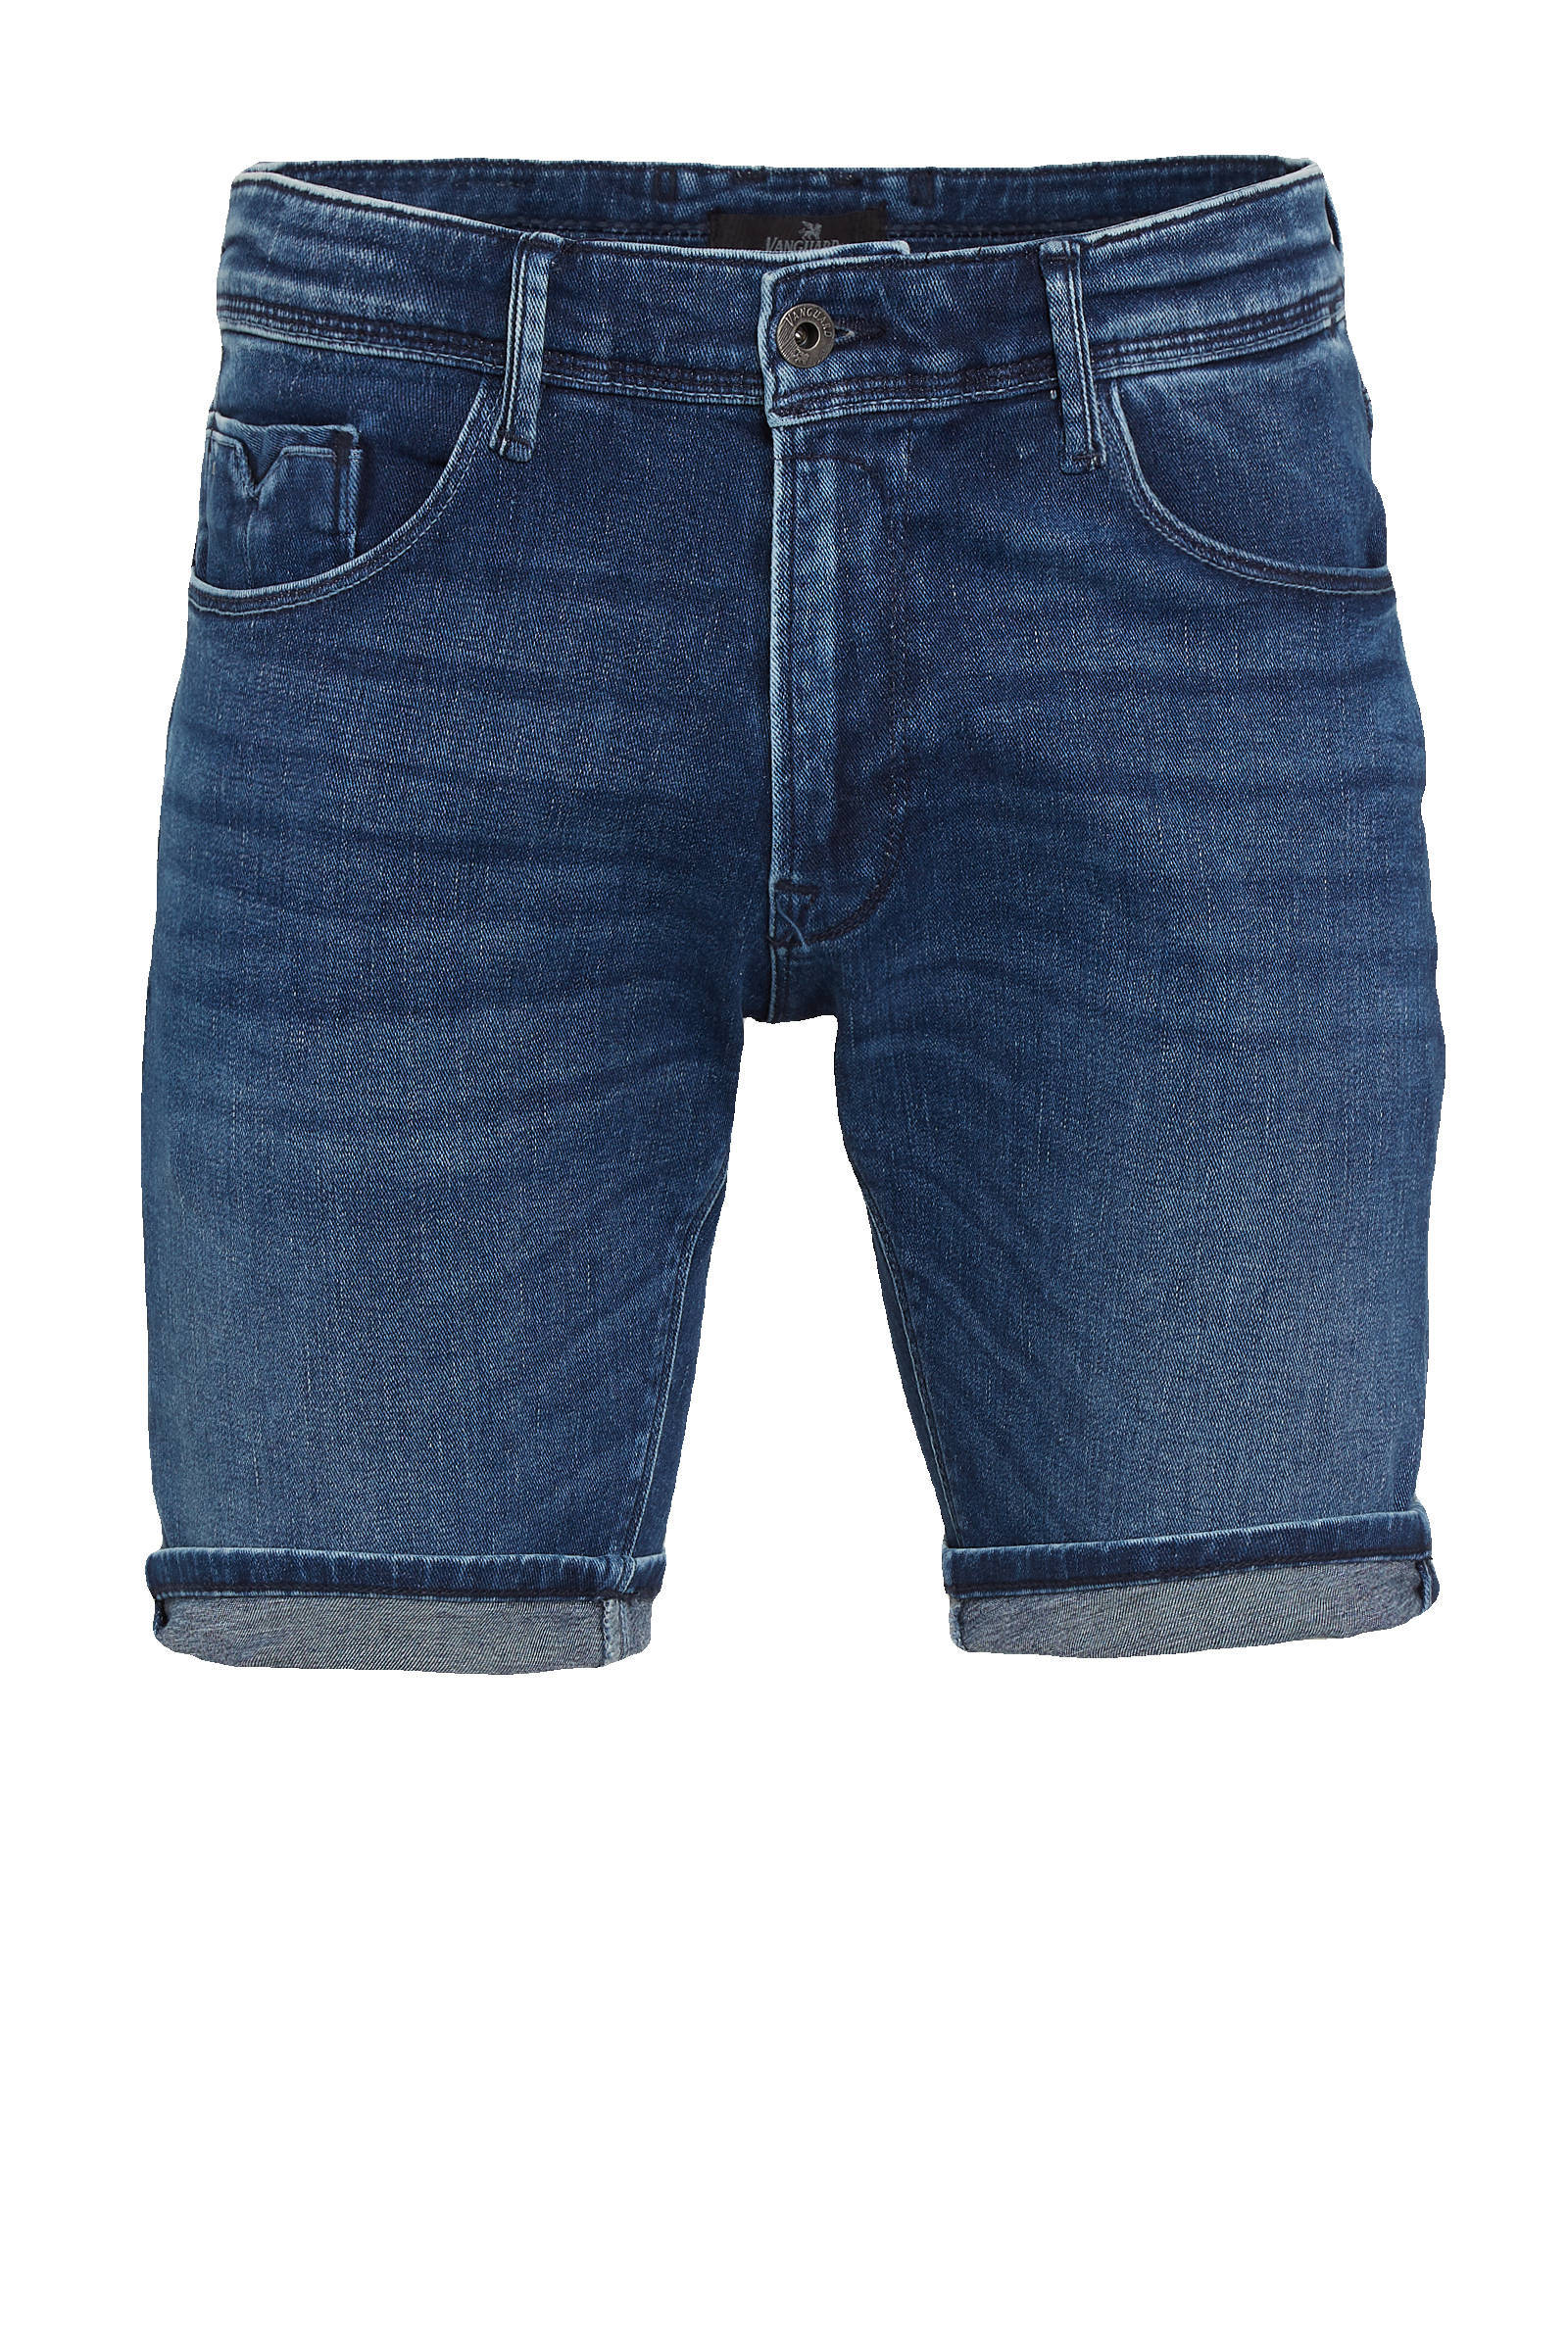 Vanguard V18 Rider Jeans Short Mid Blue online kopen